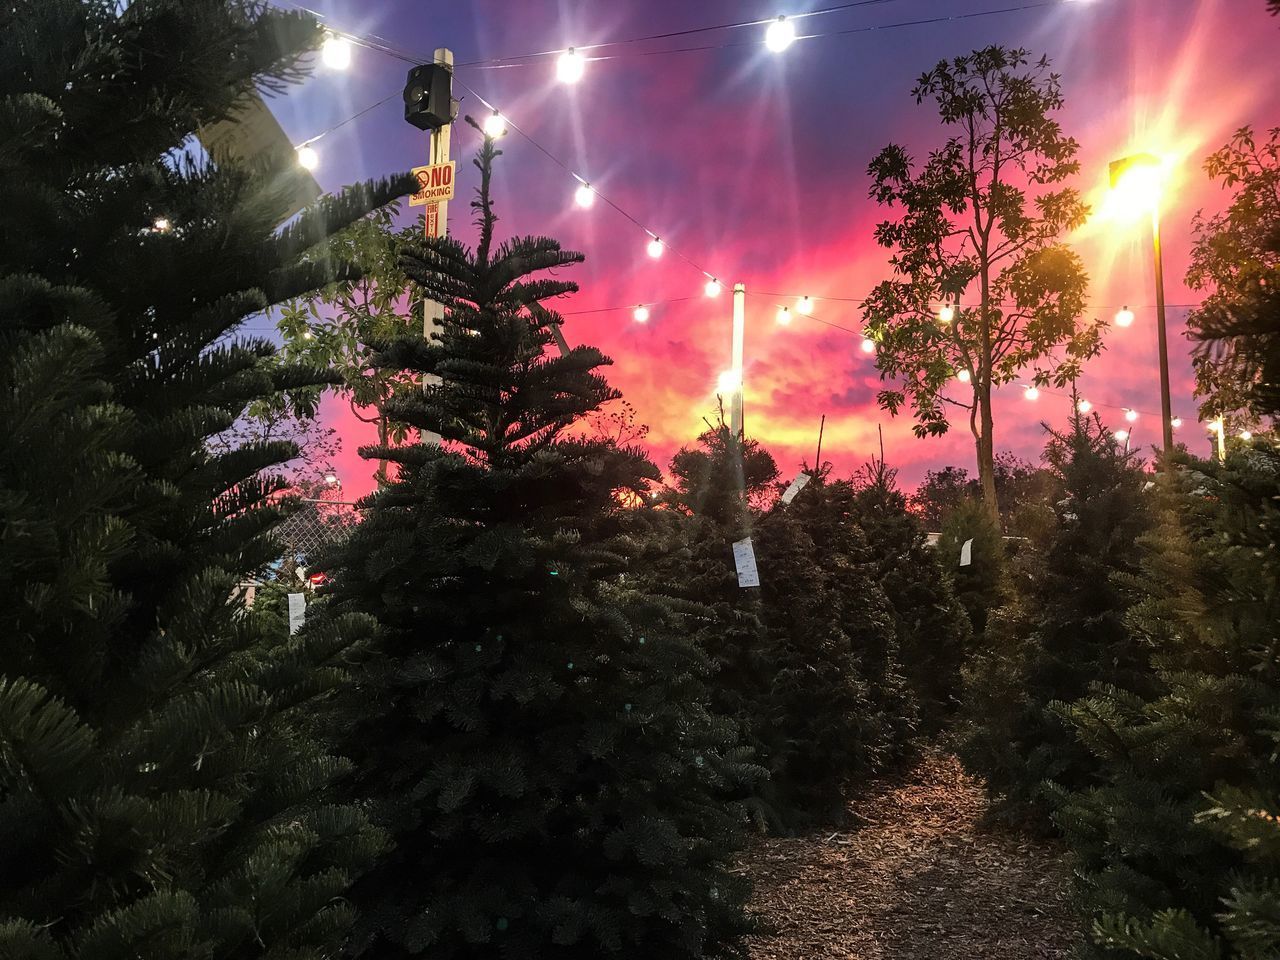 ILLUMINATED CHRISTMAS TREE AGAINST SKY